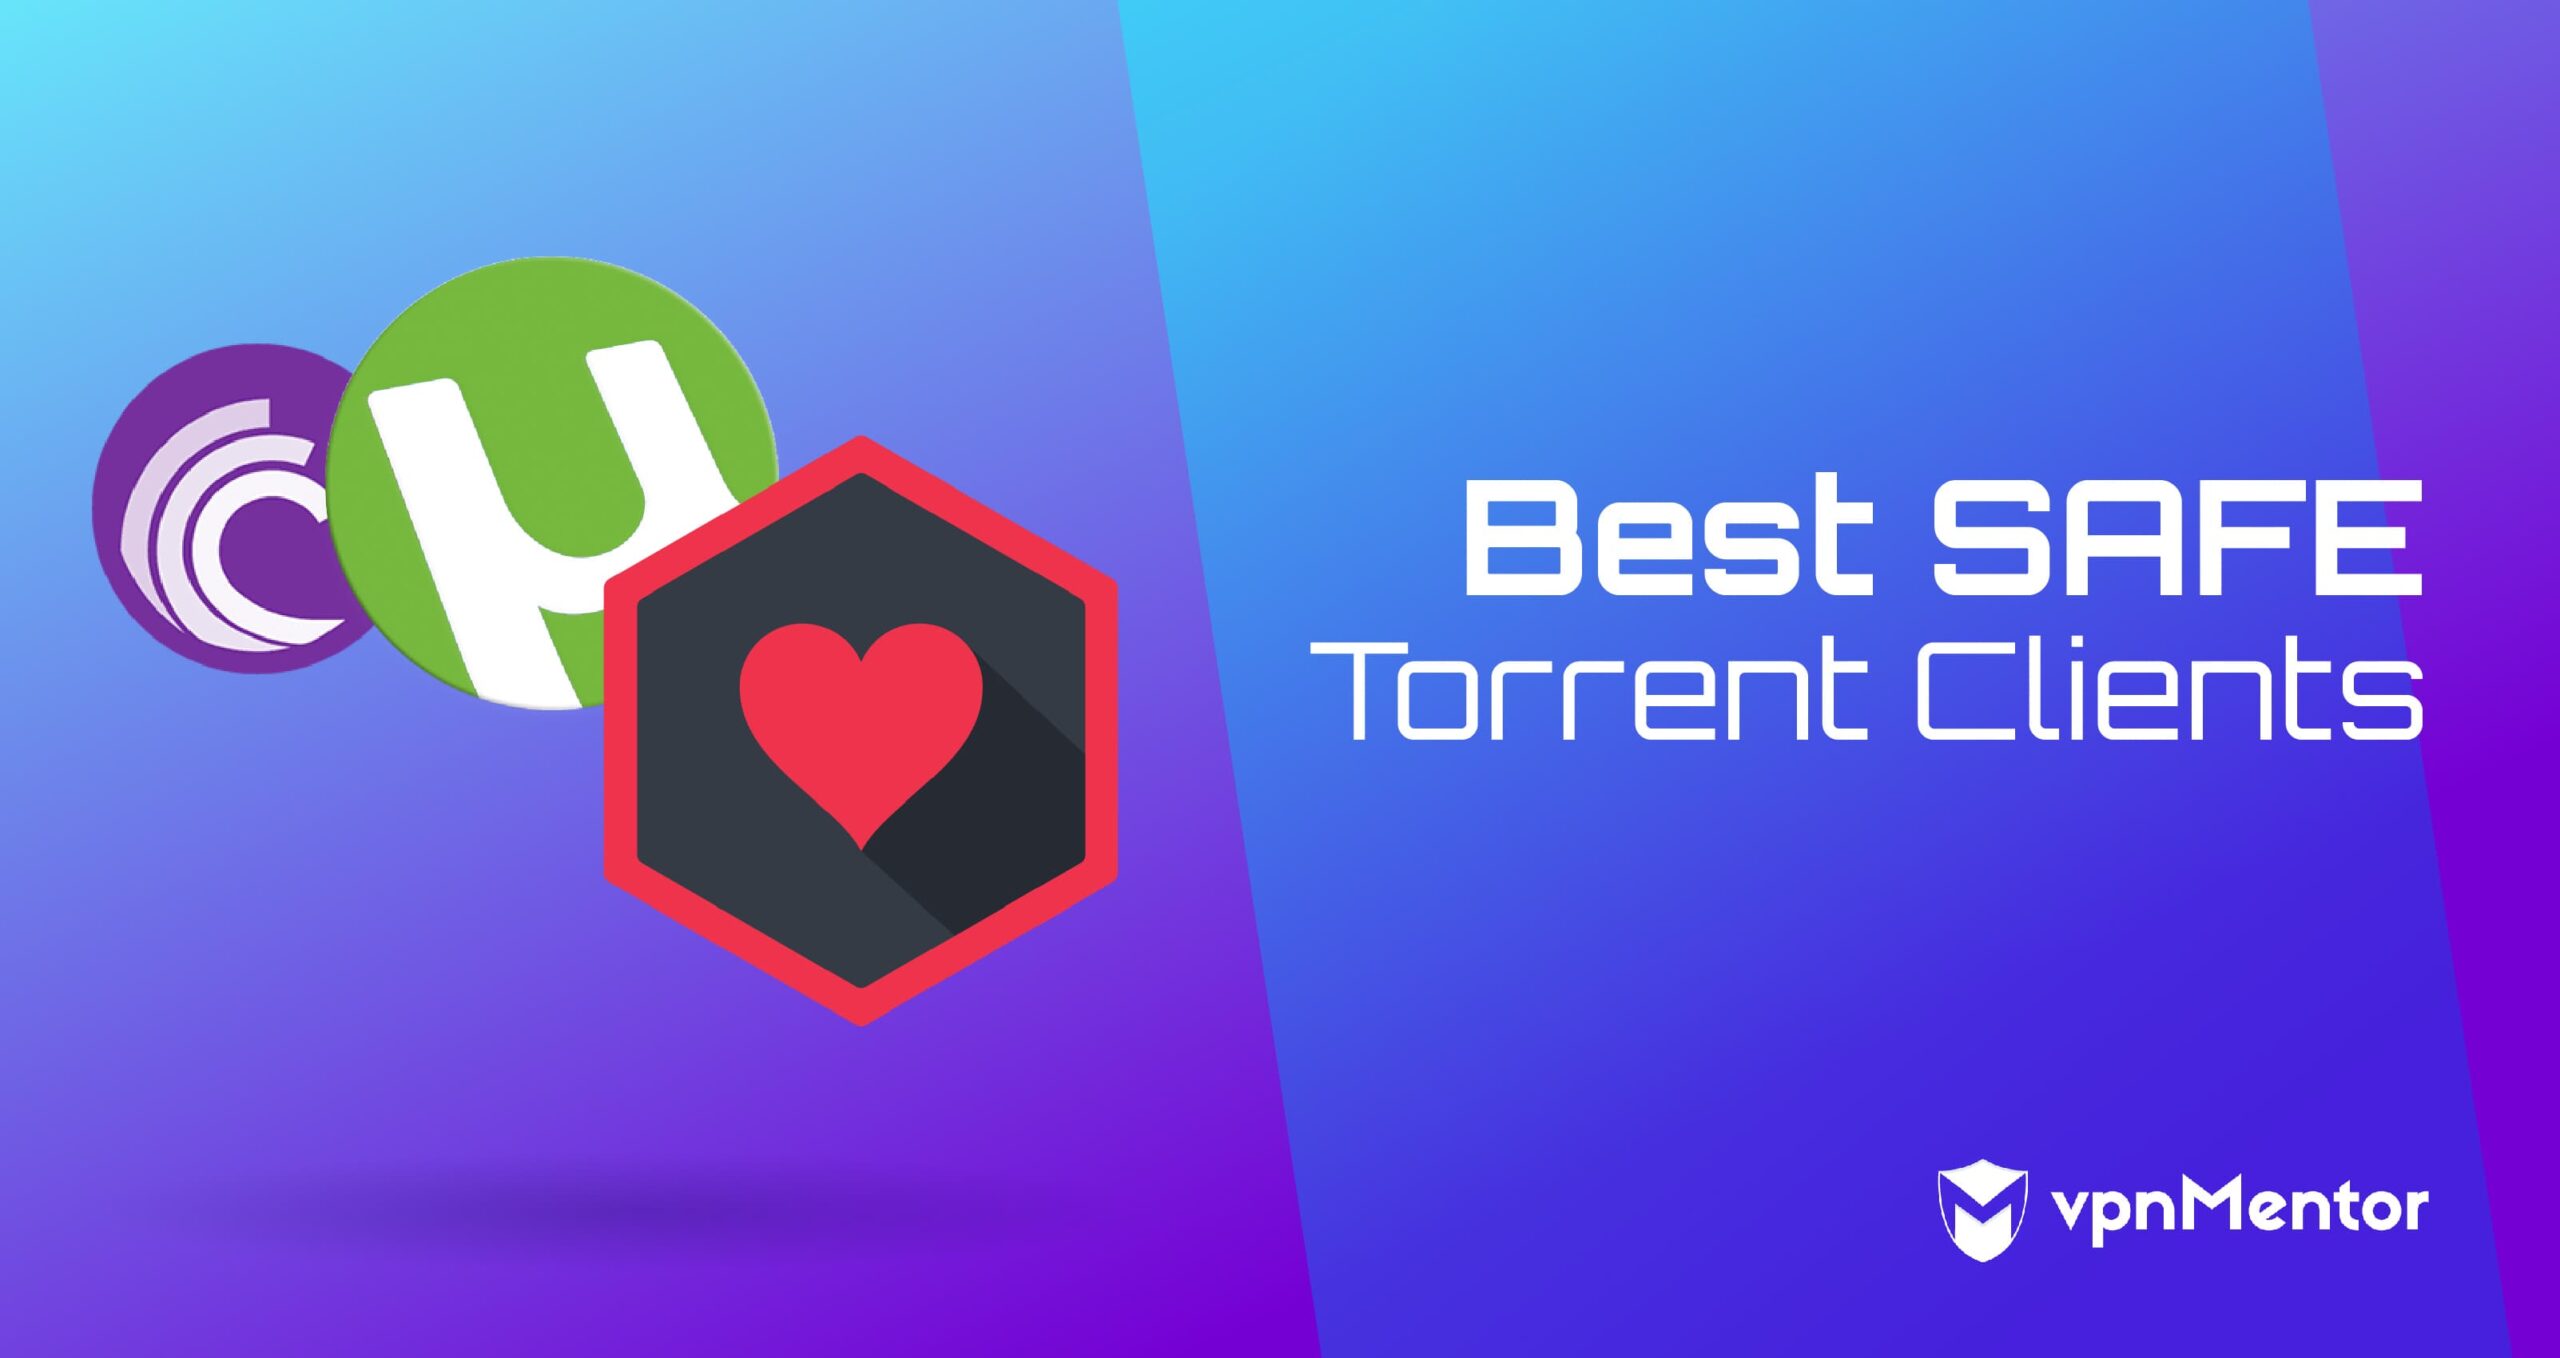 Torrent client